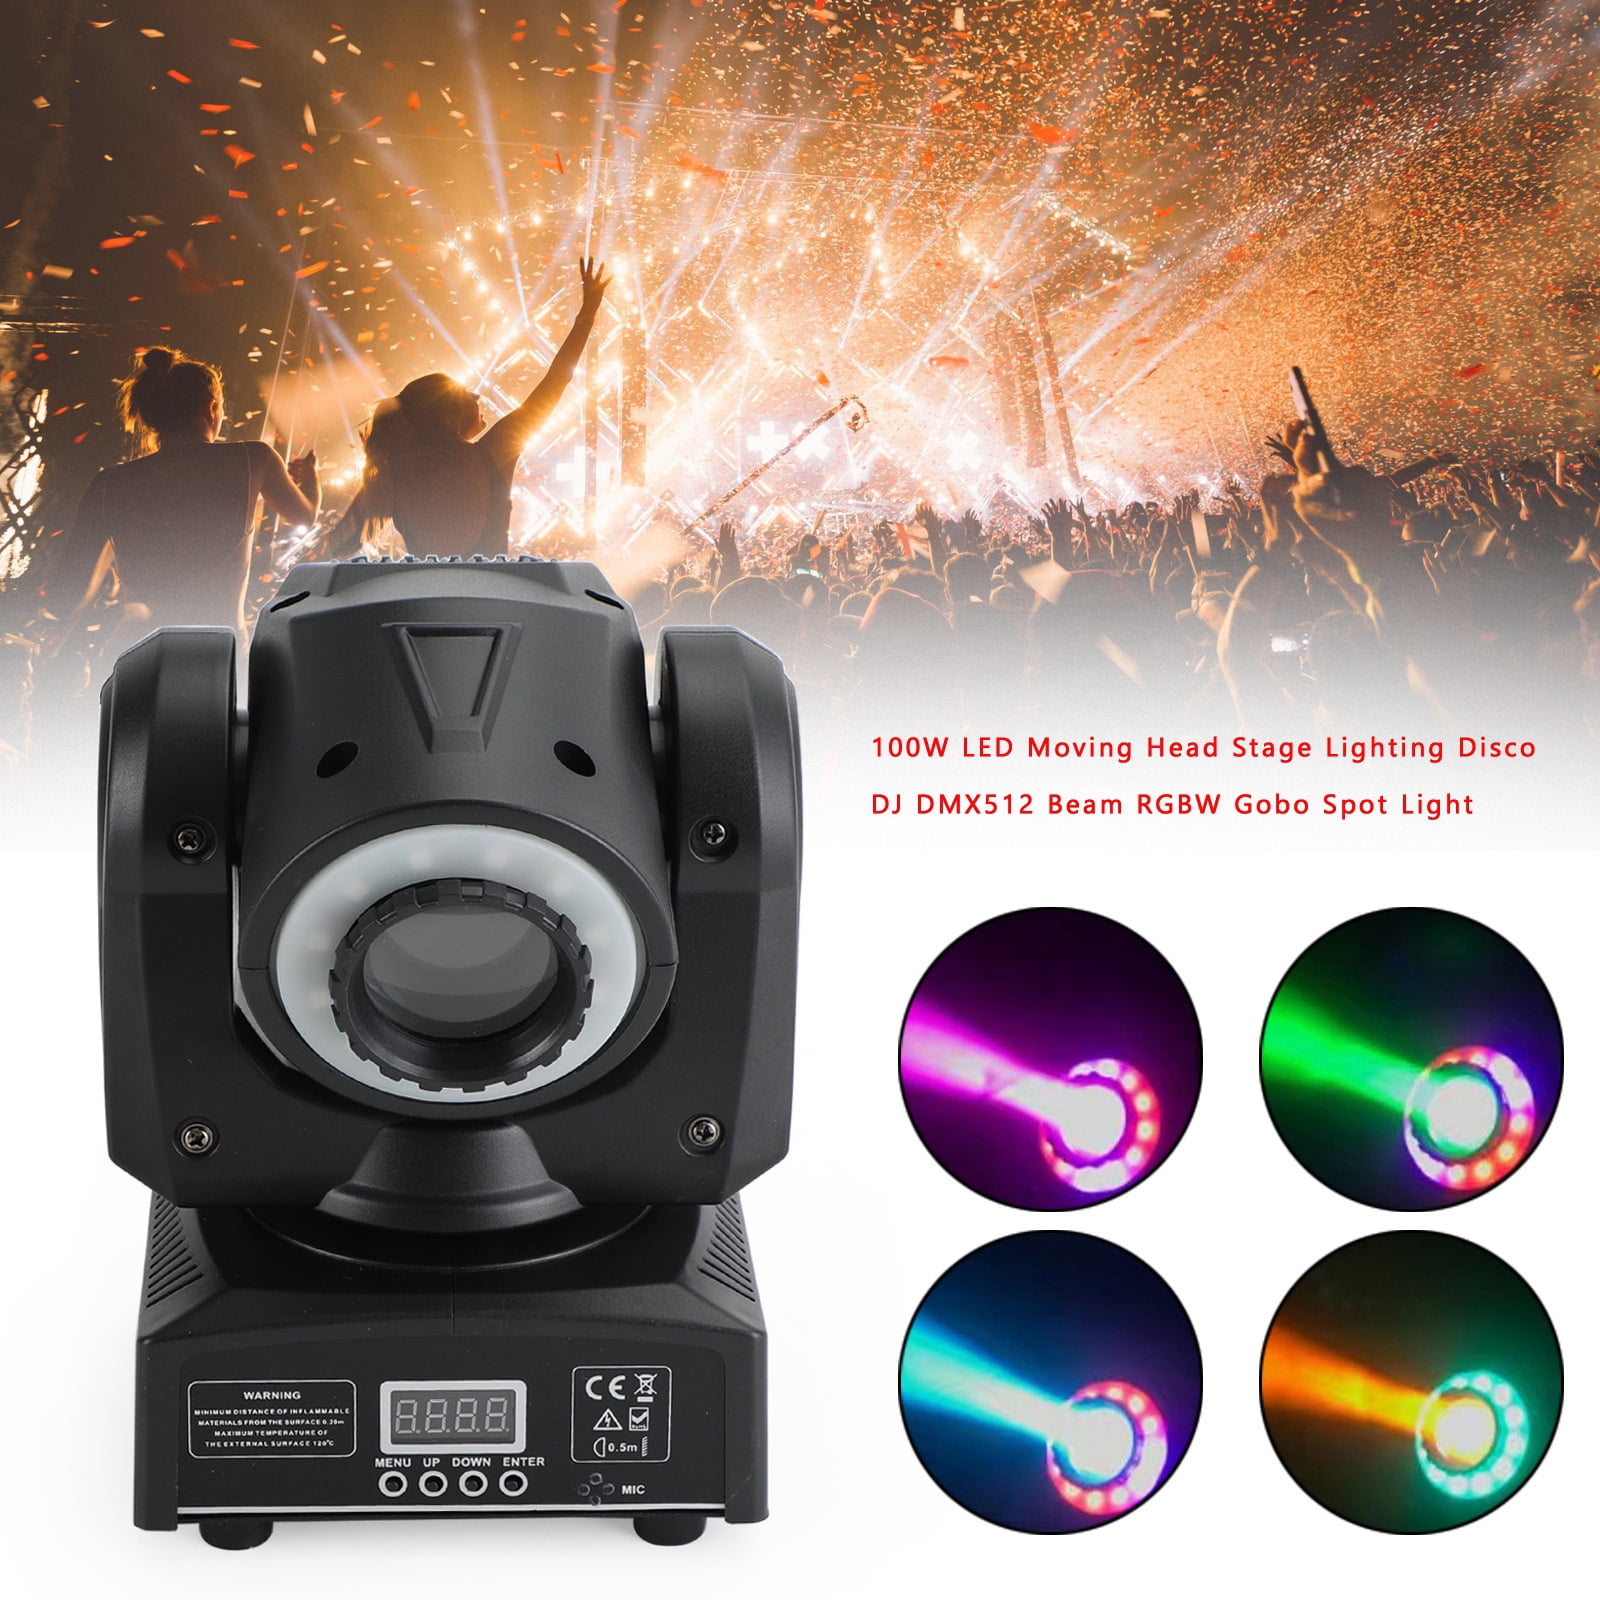 100W LED Moving Head Stage Lighting Disco DJ DMX512 Beam RGBW Gobo Spot Light Walmart.com